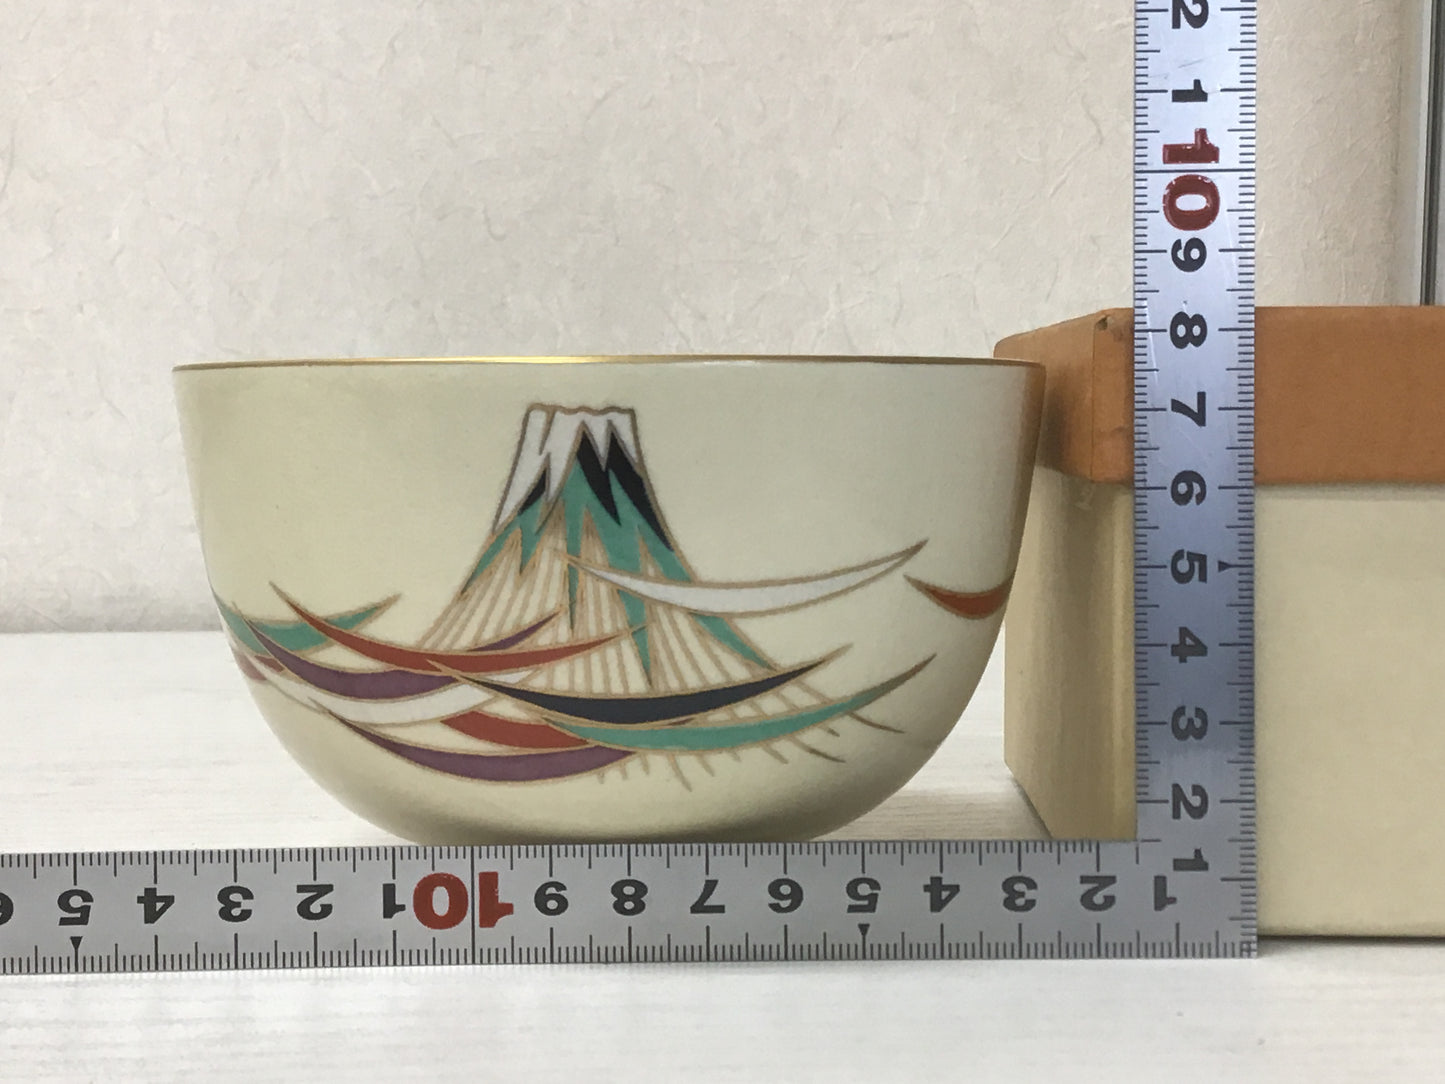 Y1417 CHAWAN Kyo-ware box Japanese bowl pottery Japan tea ceremony antique